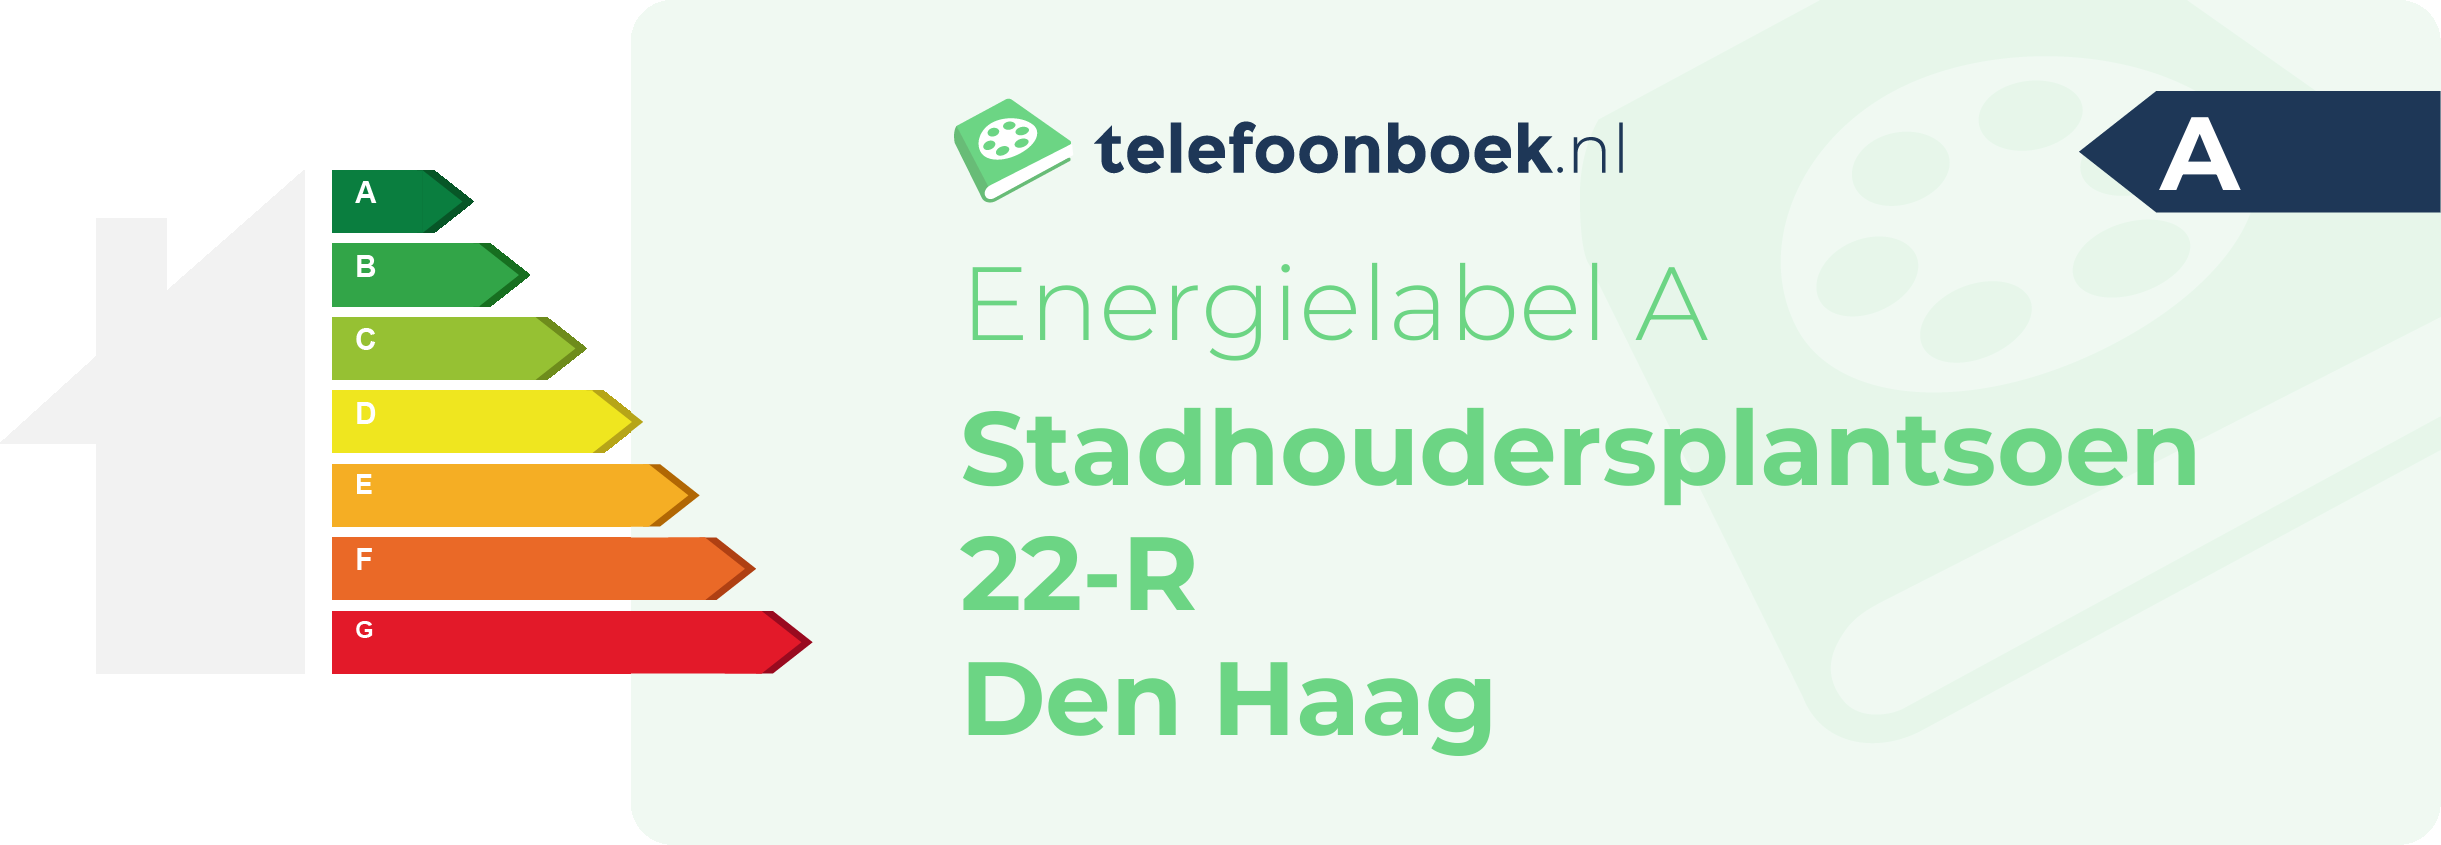 Energielabel Stadhoudersplantsoen 22-R Den Haag